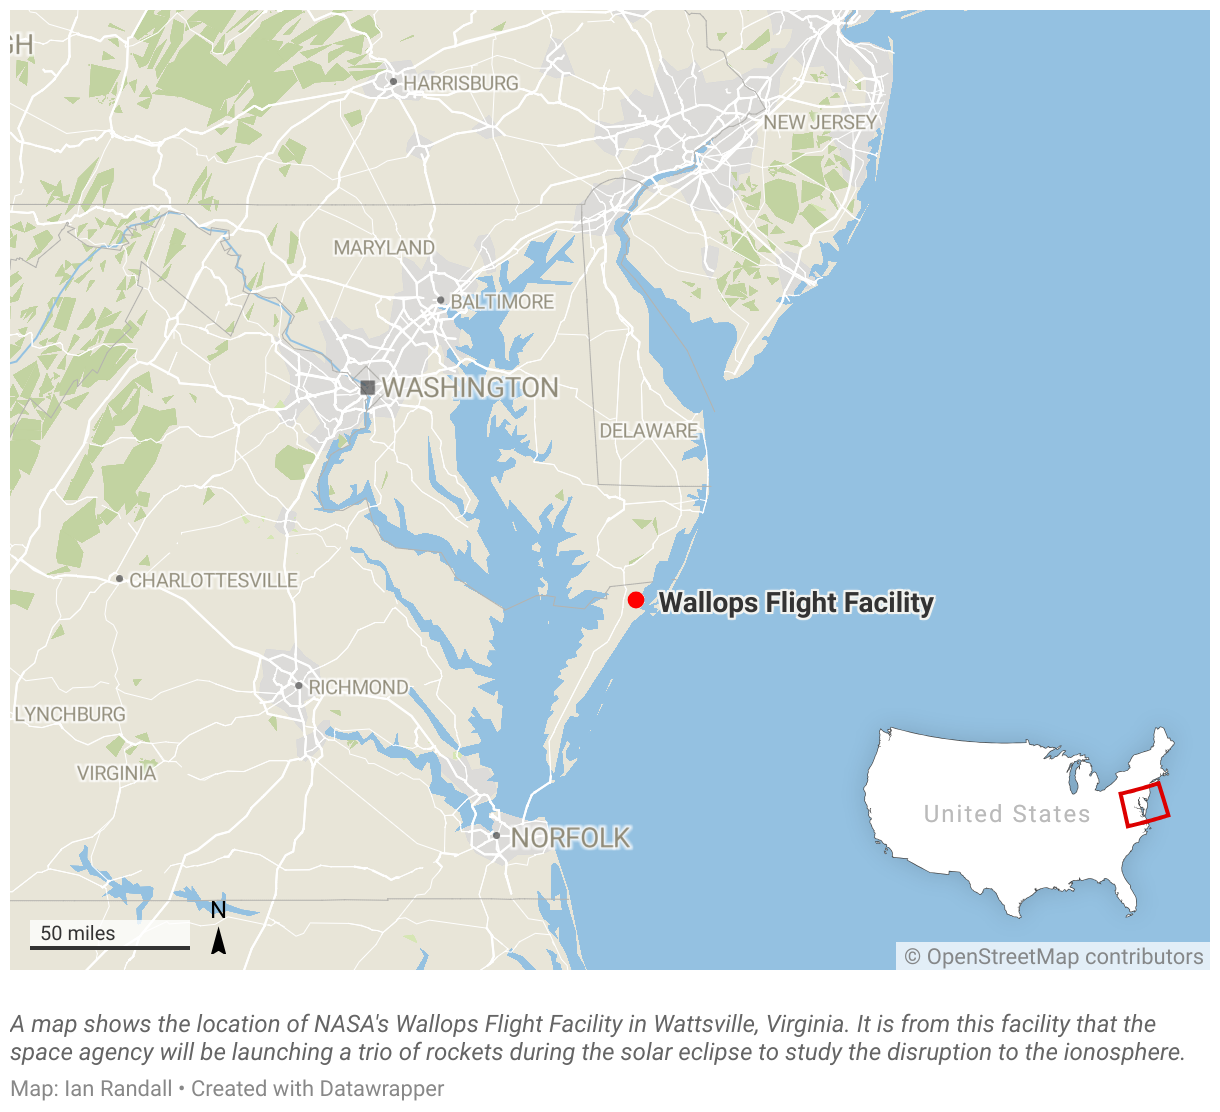 A map shows the location of NASA's Wallops Flight Facility in Wattsville, Virginia.